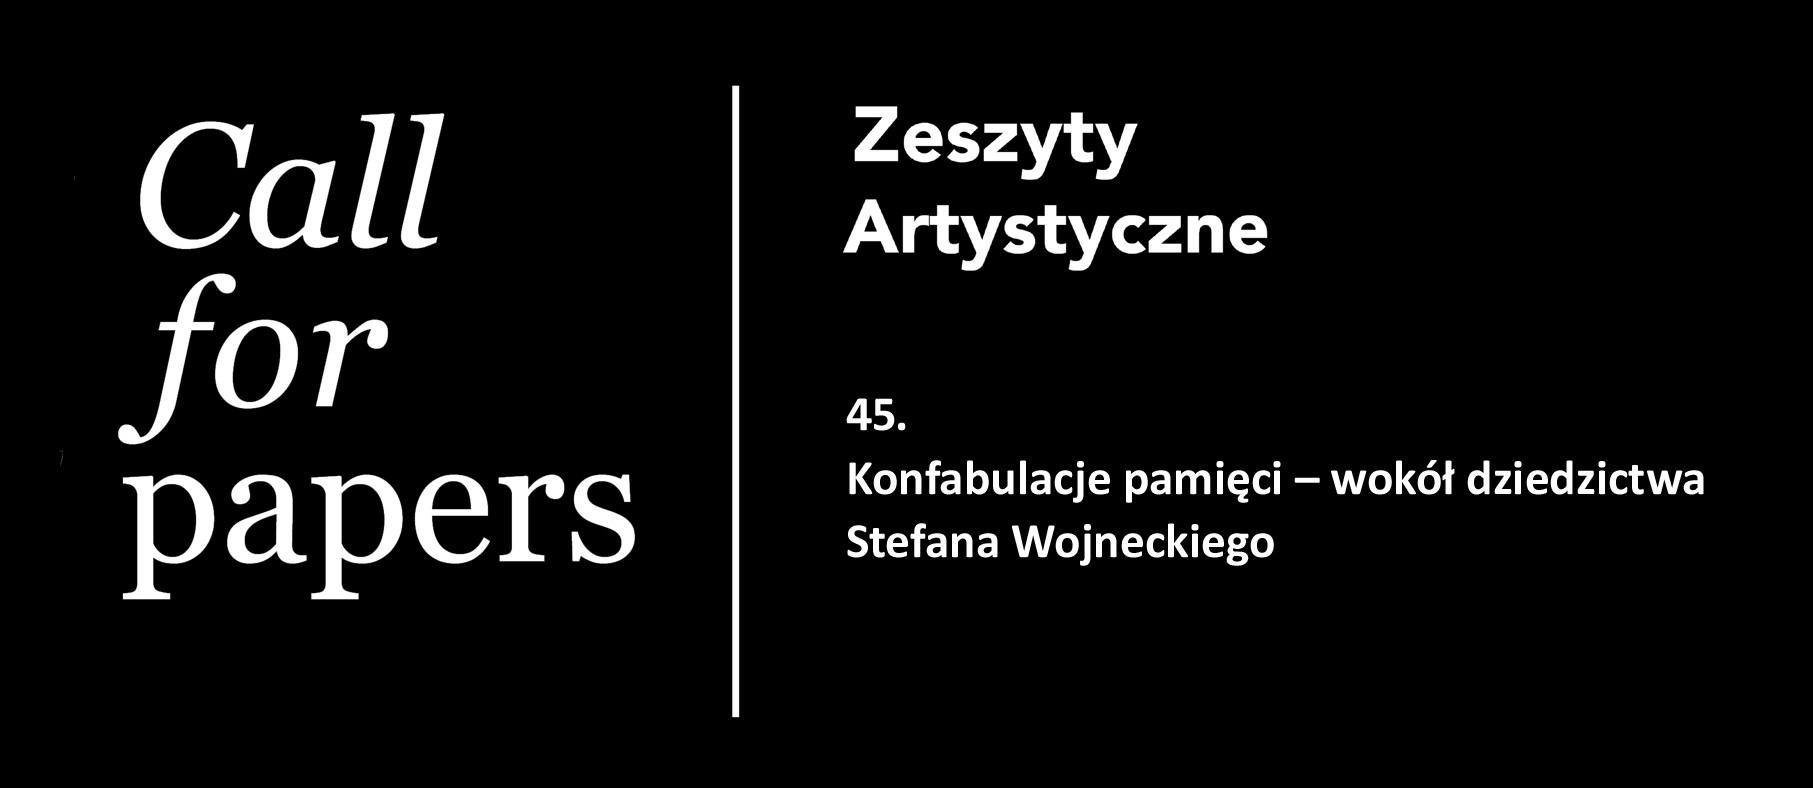 Call for papers – 45. numer "Zeszyty Artystyczne"